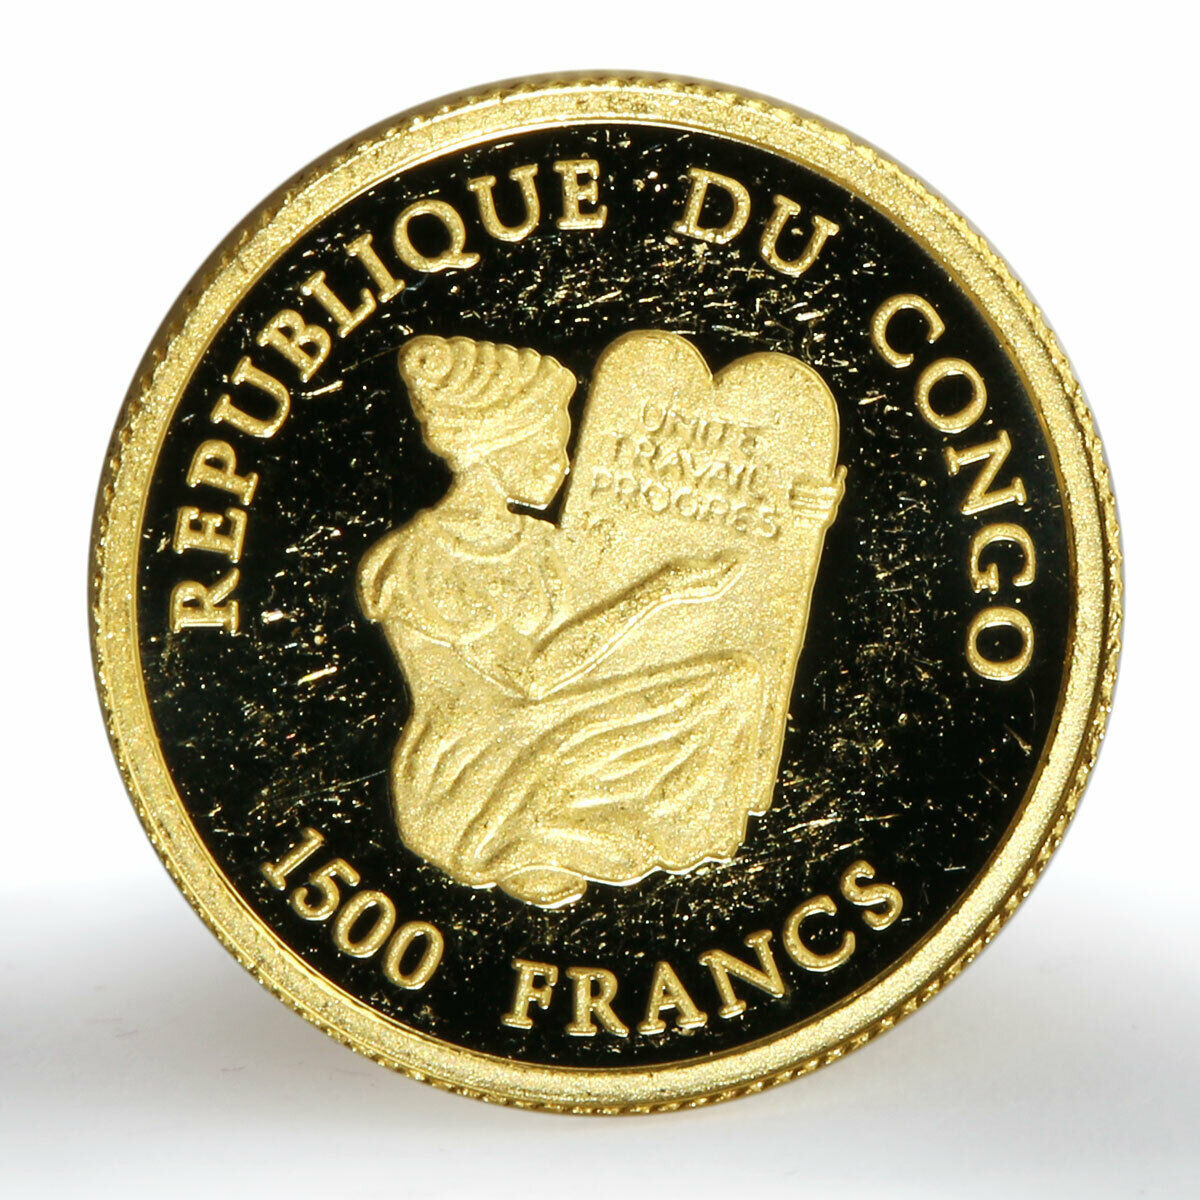 Congo 1500 francs Dresden Frauenkirche proof gold coin 2004